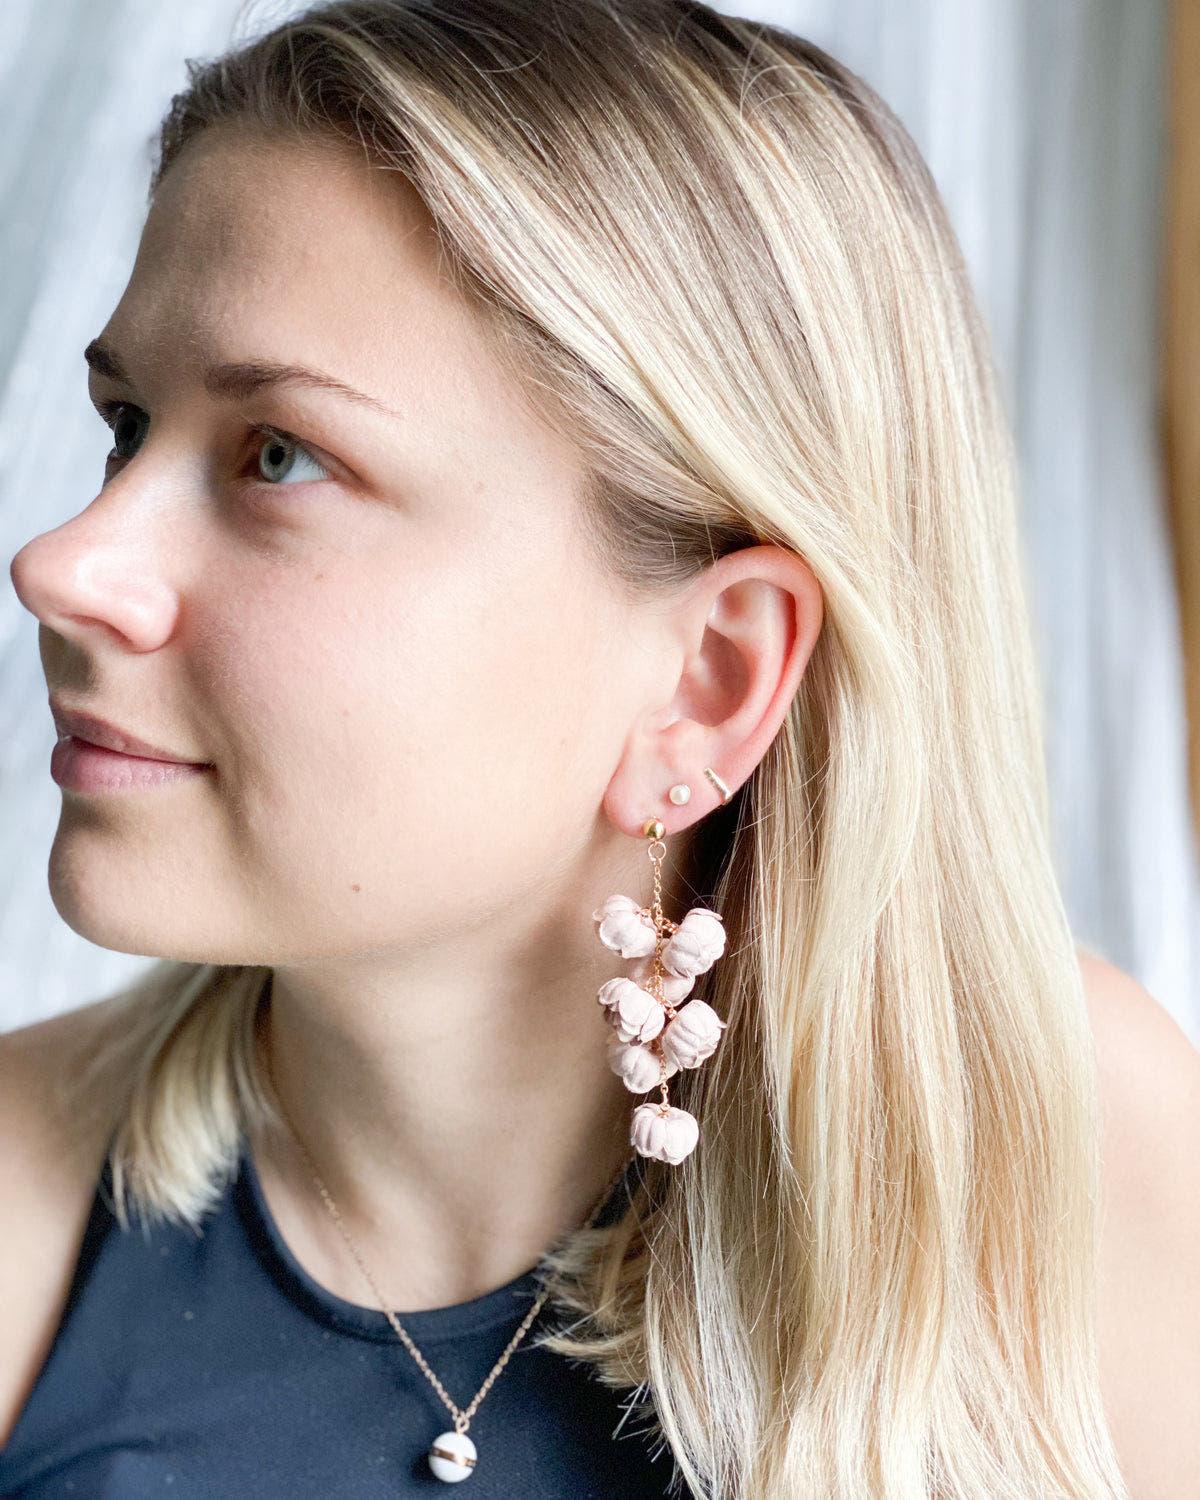 Floral statement earrings freeshipping - Ollijewelry